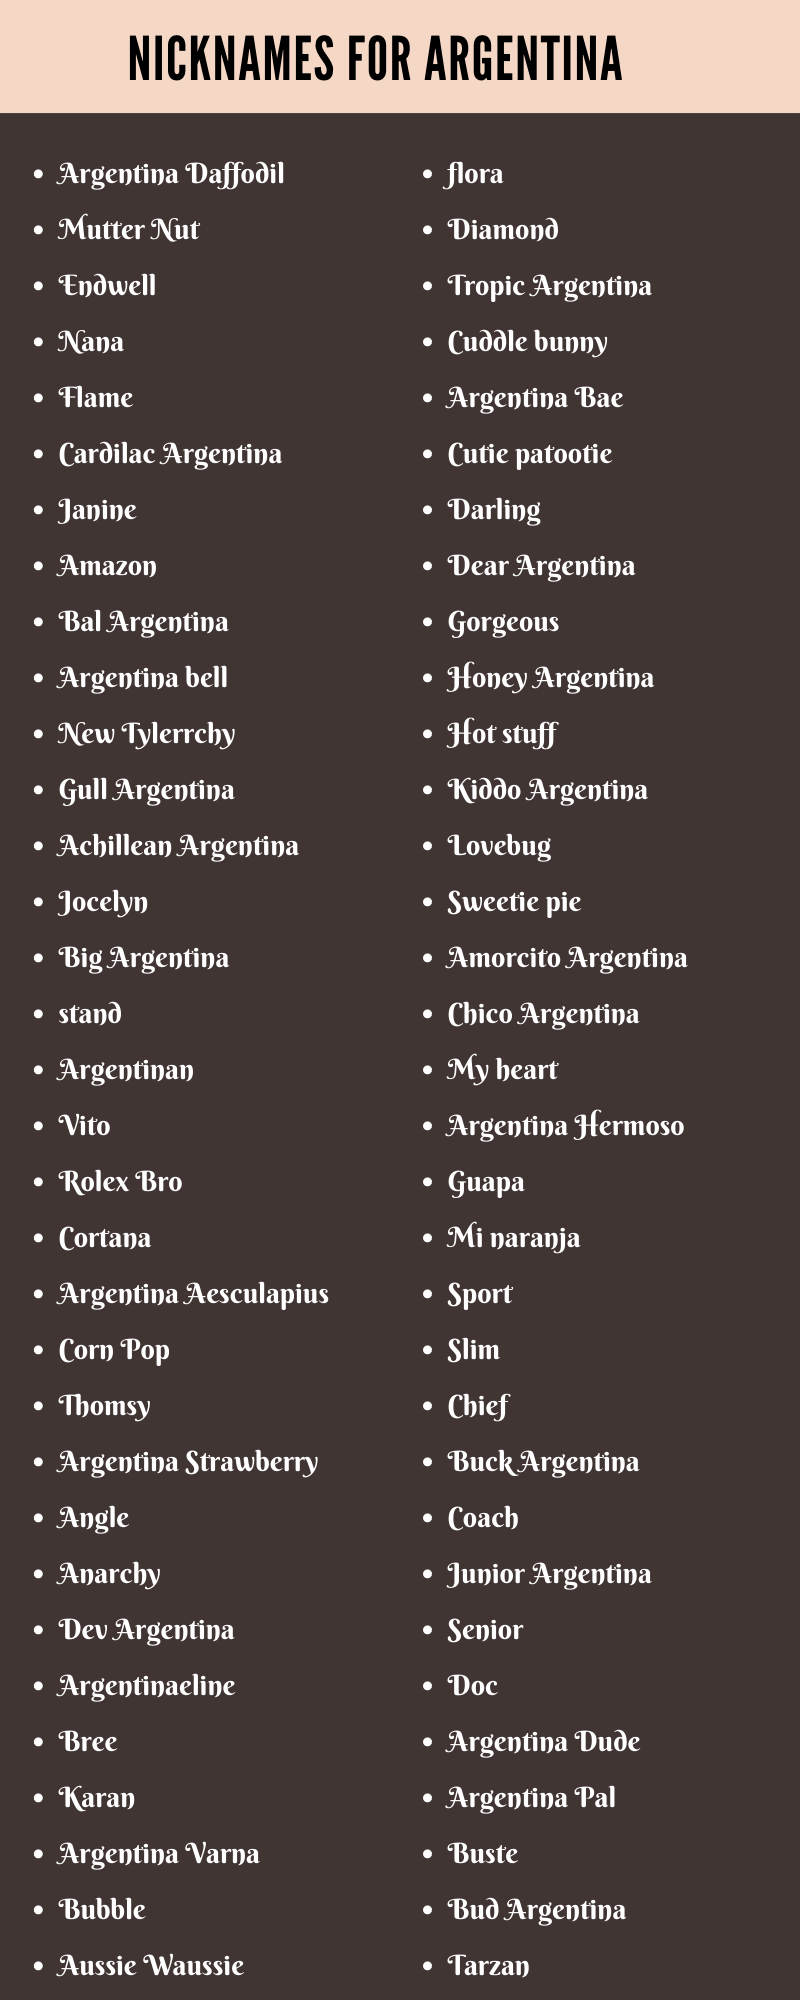 Nicknames for Argentina